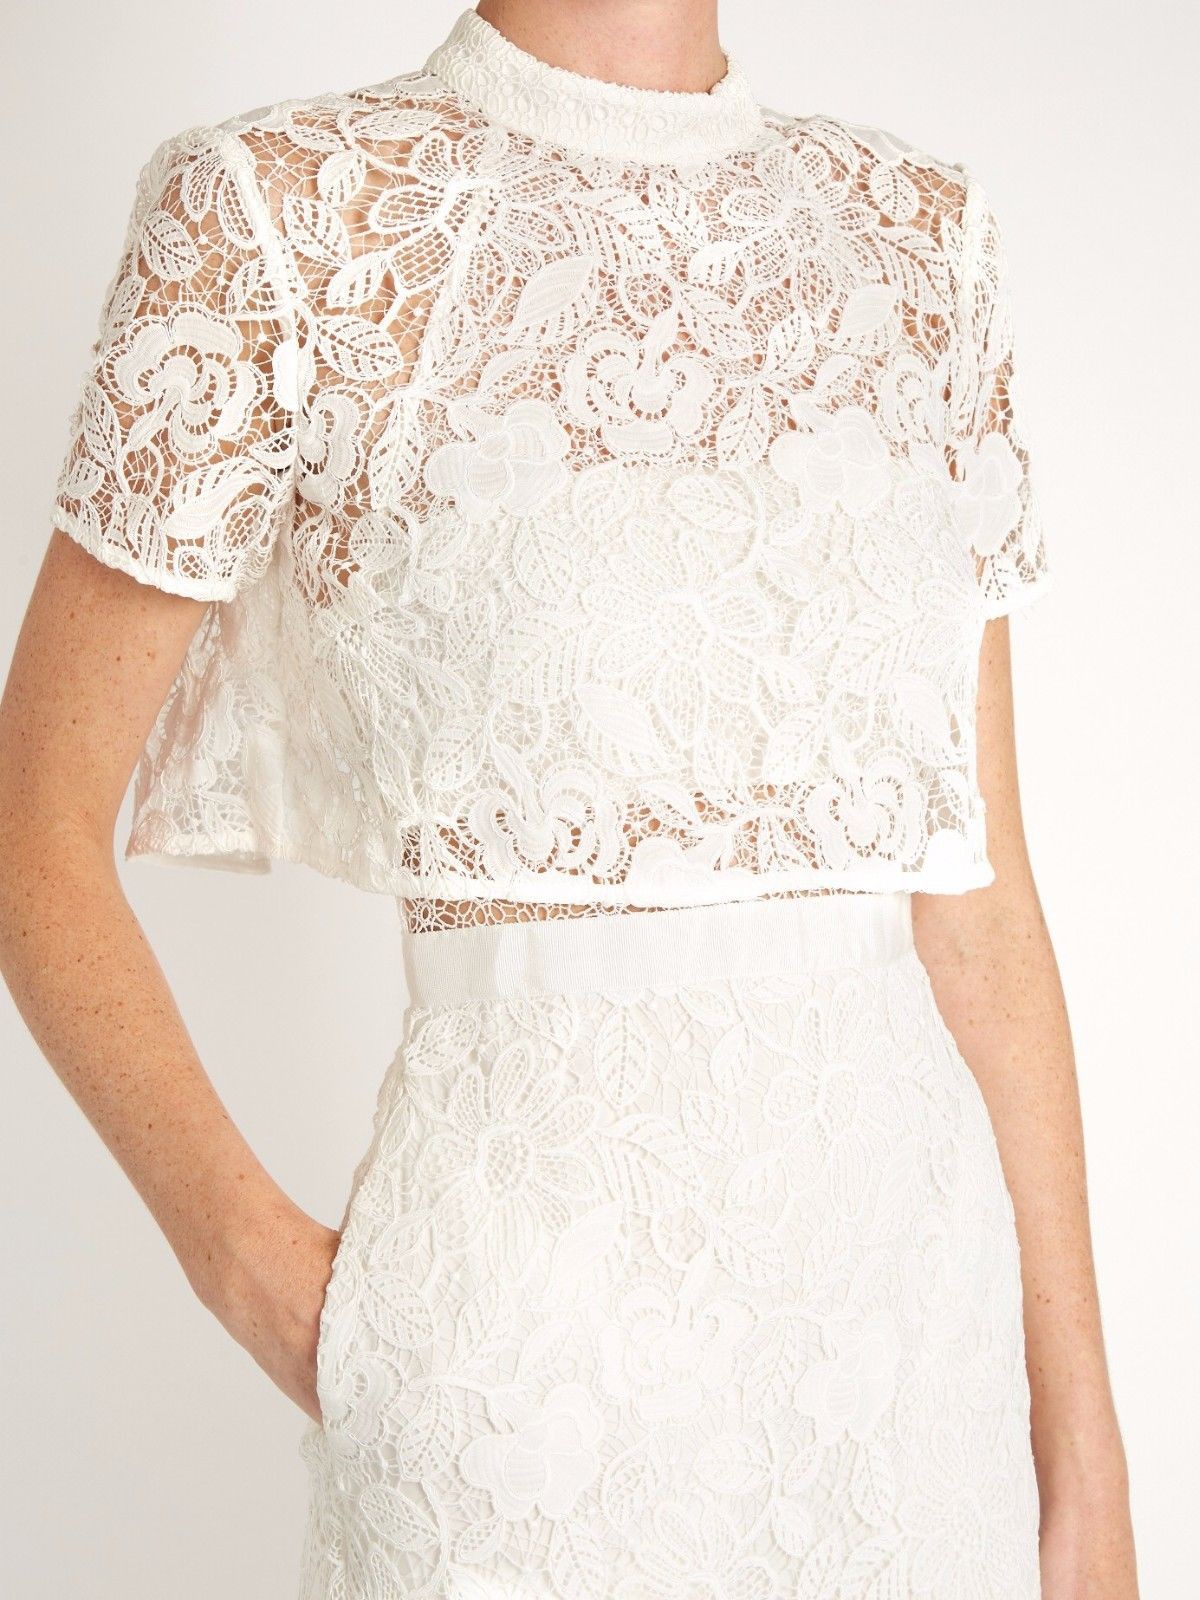 Self Portrait Marcela Bridal Dress New Wedding Dress Save 78% - Stillwhite